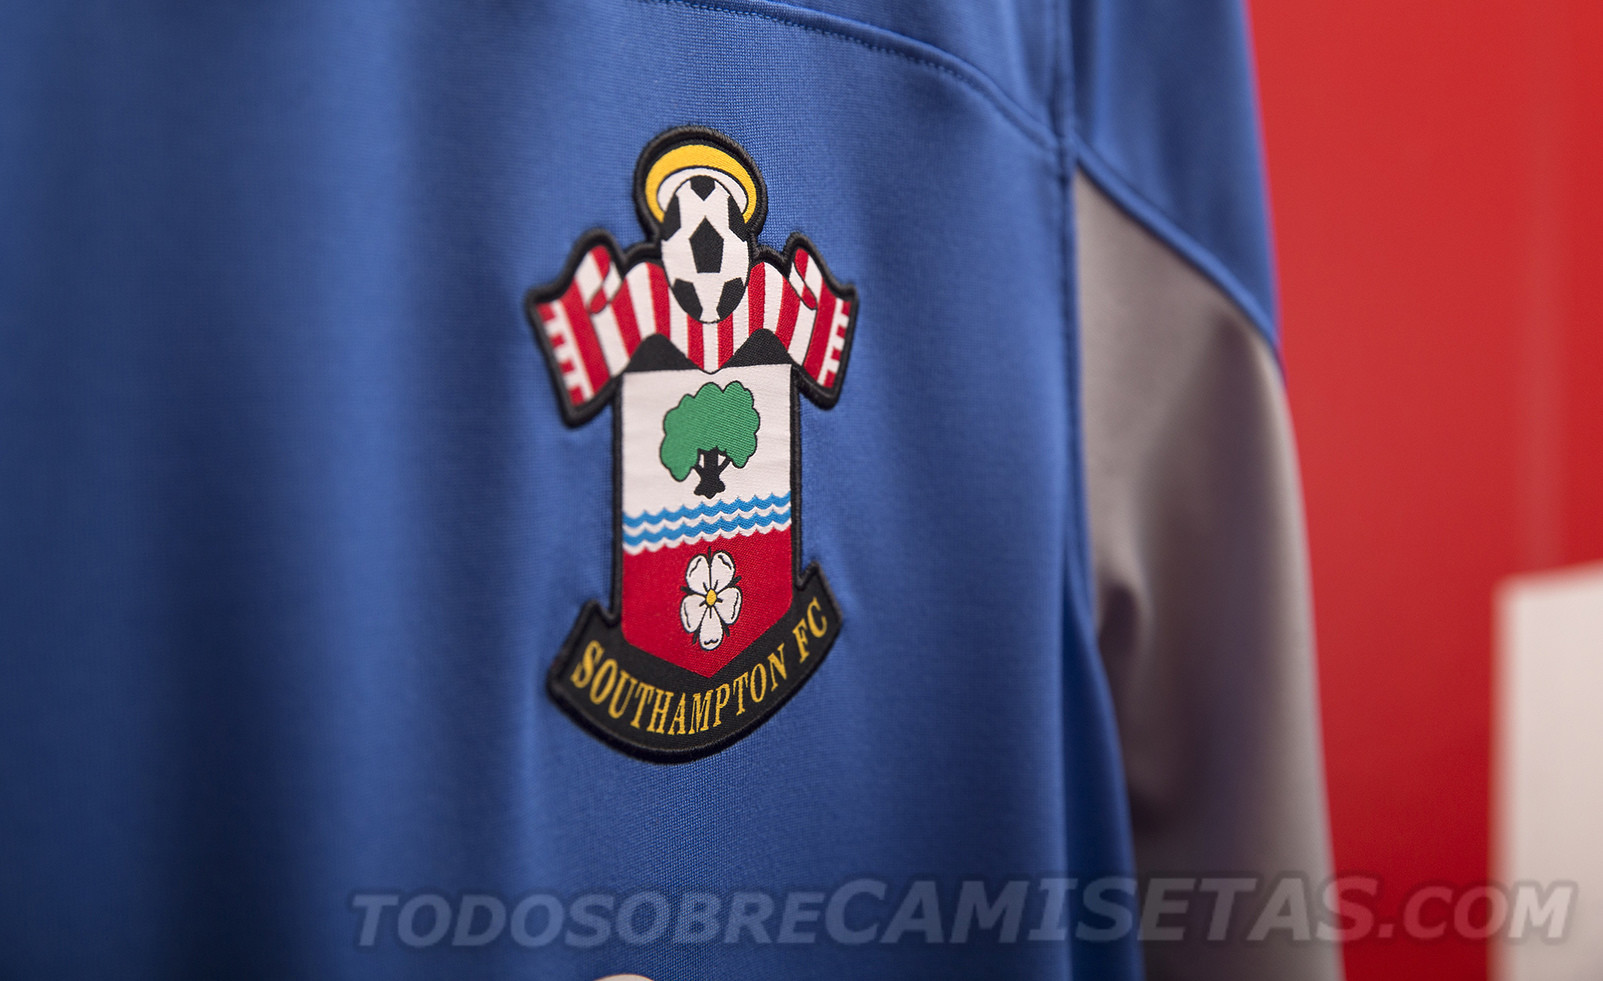 Southampton FC Under Armour 2018-19 Kits